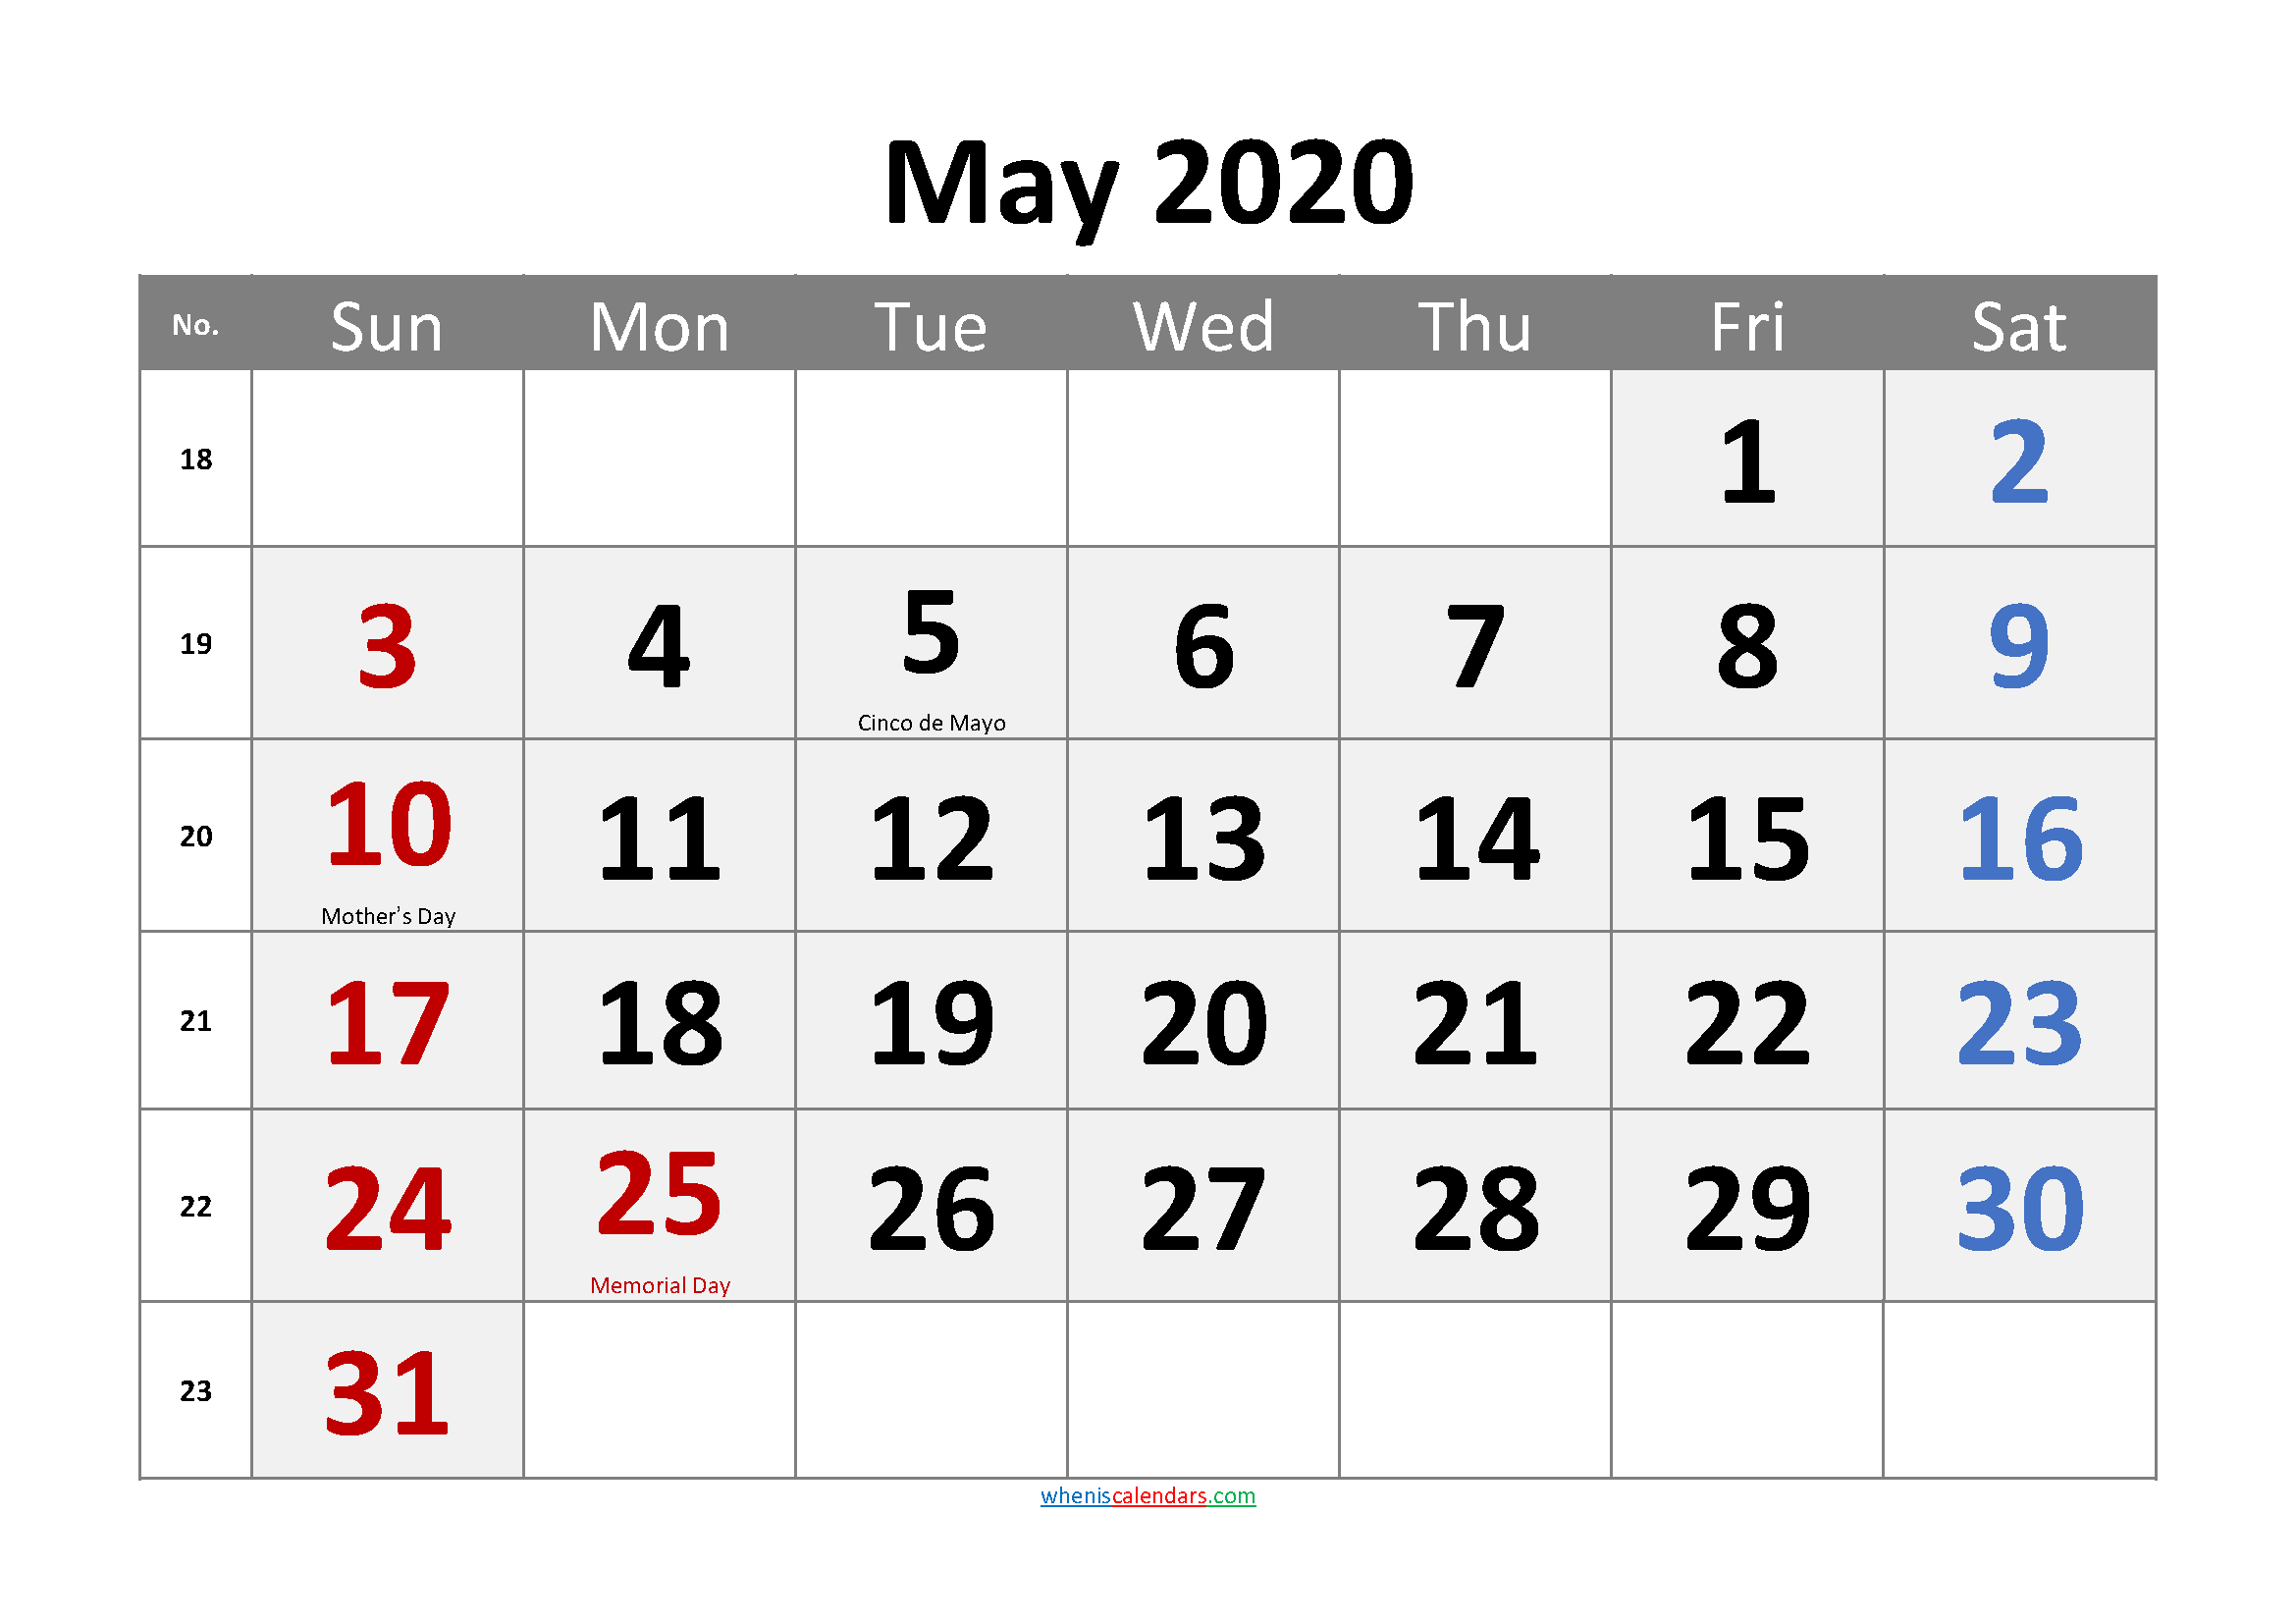 MAY 2020 Printable Calendar with Holidays